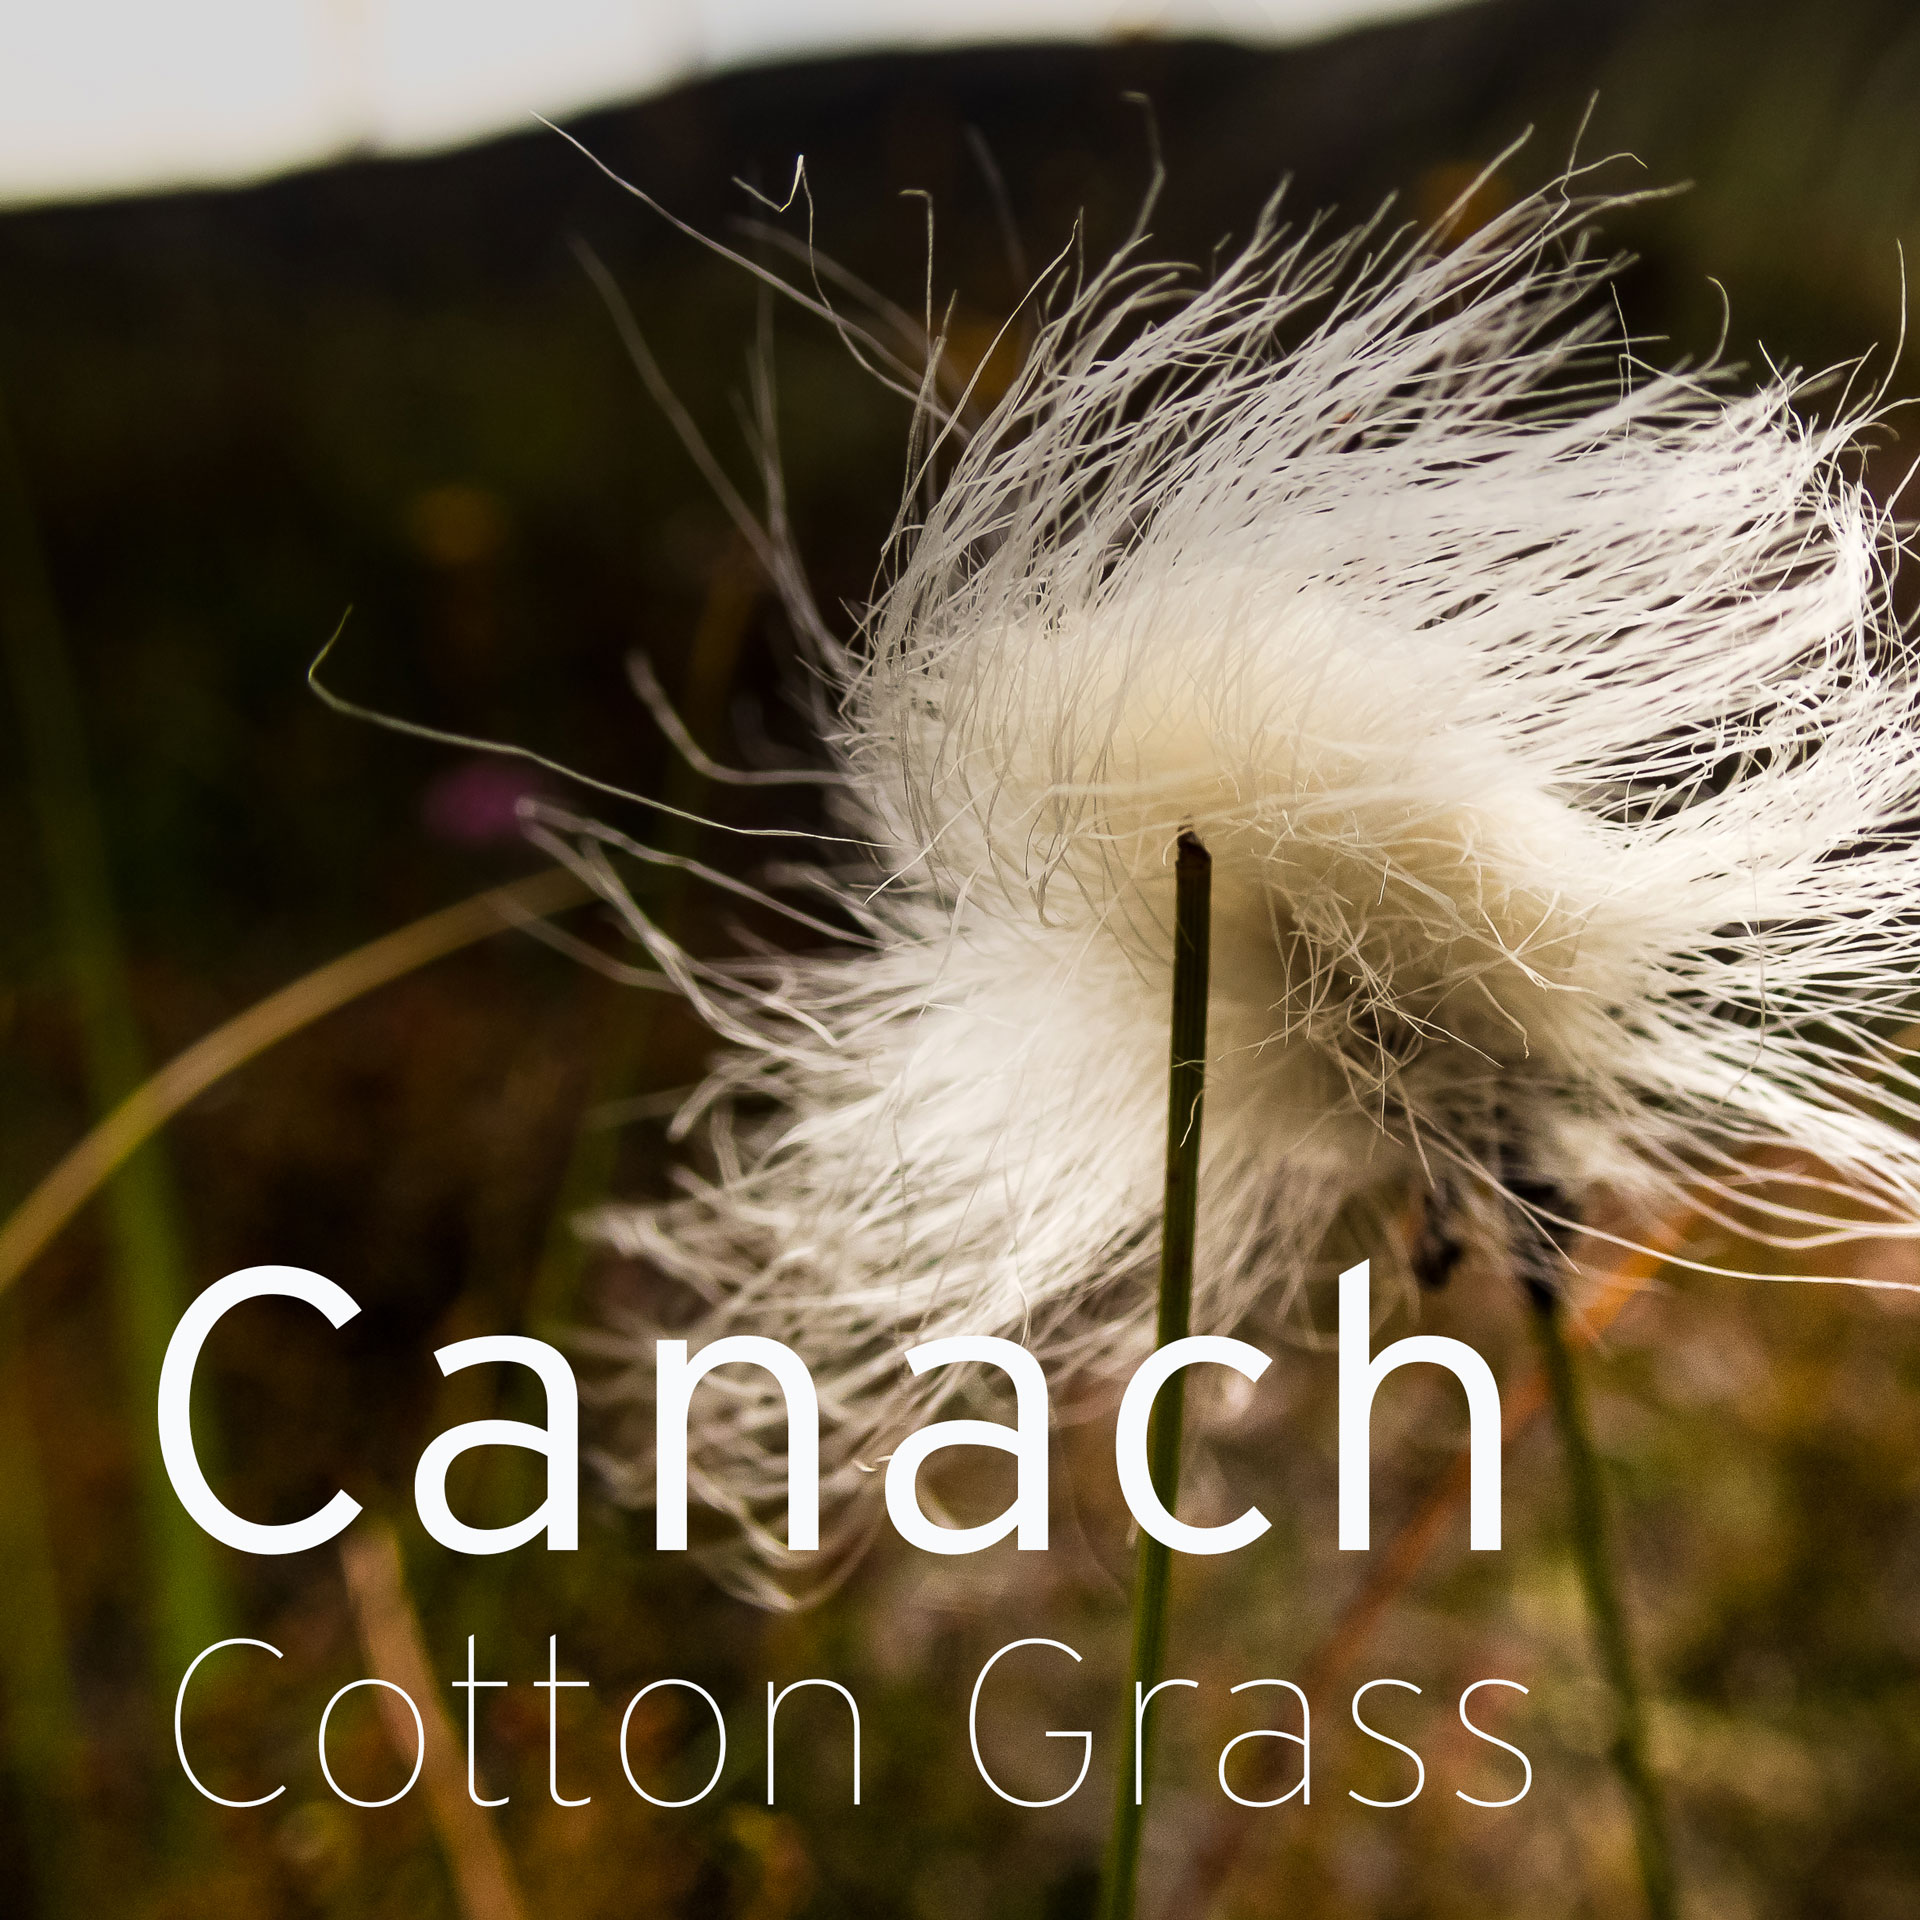 canach, cotton grass, bog cotton